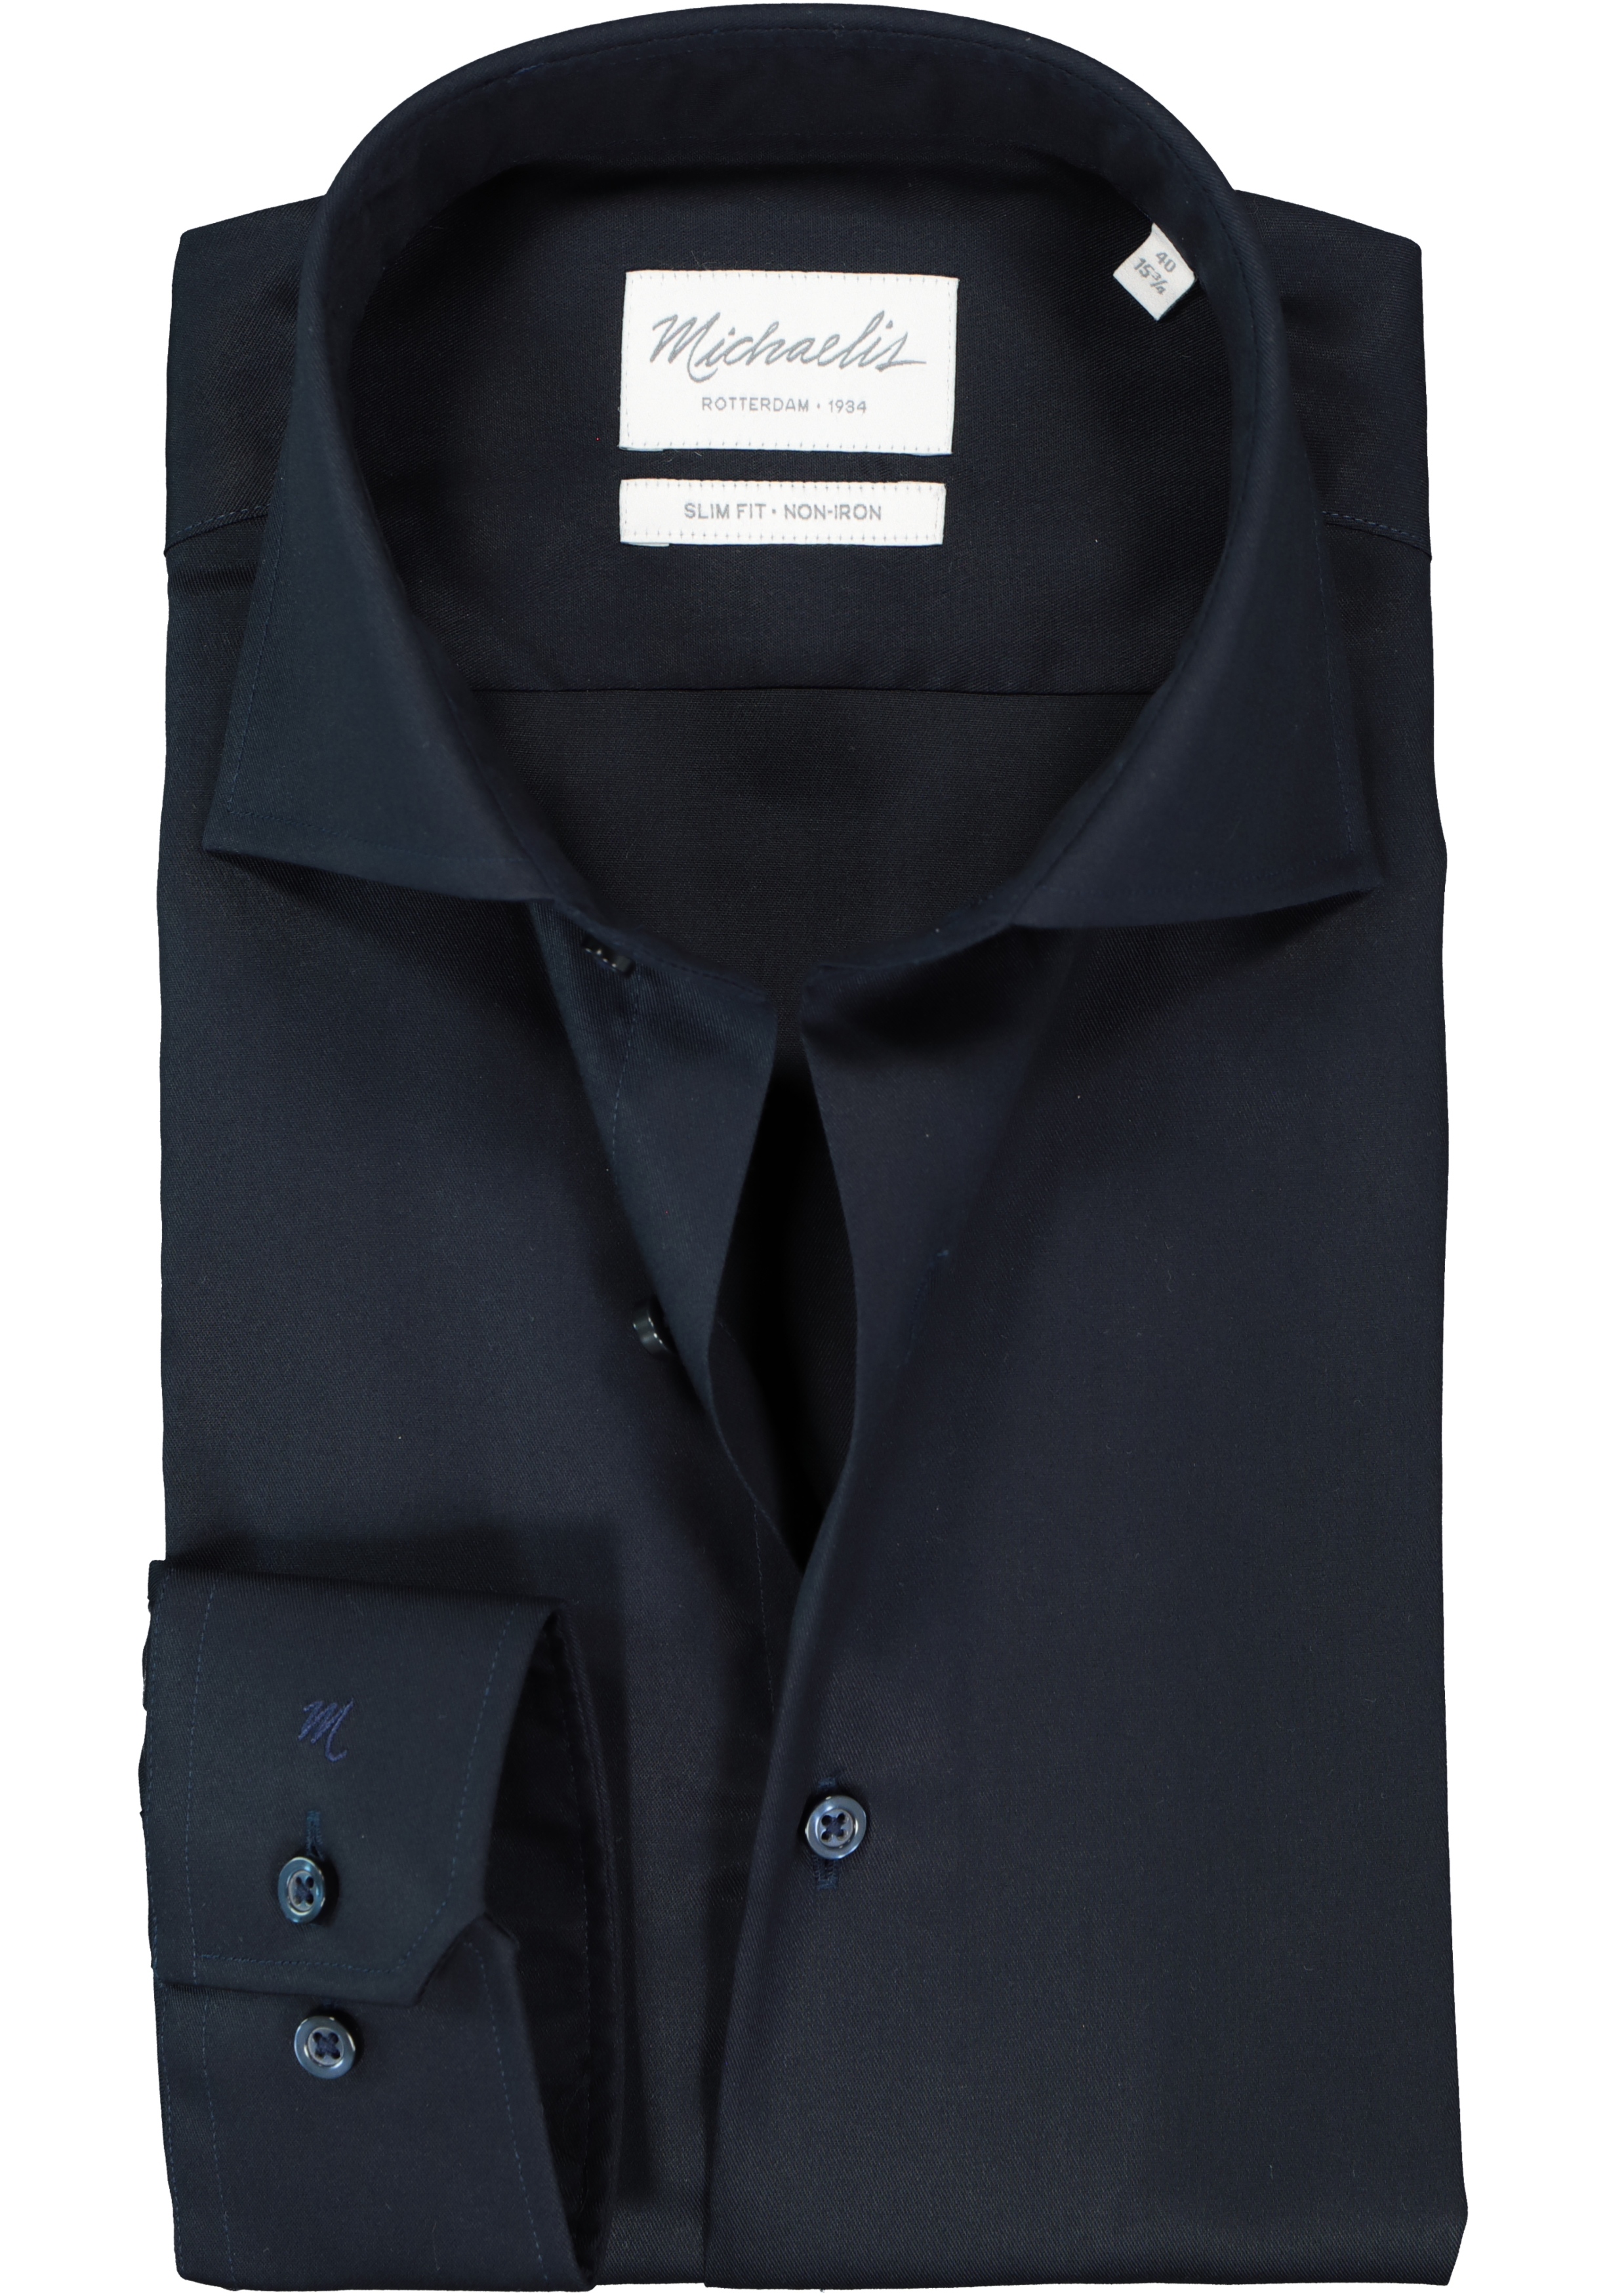 Michaelis slim fit overhemd, Oxford, navy blauw